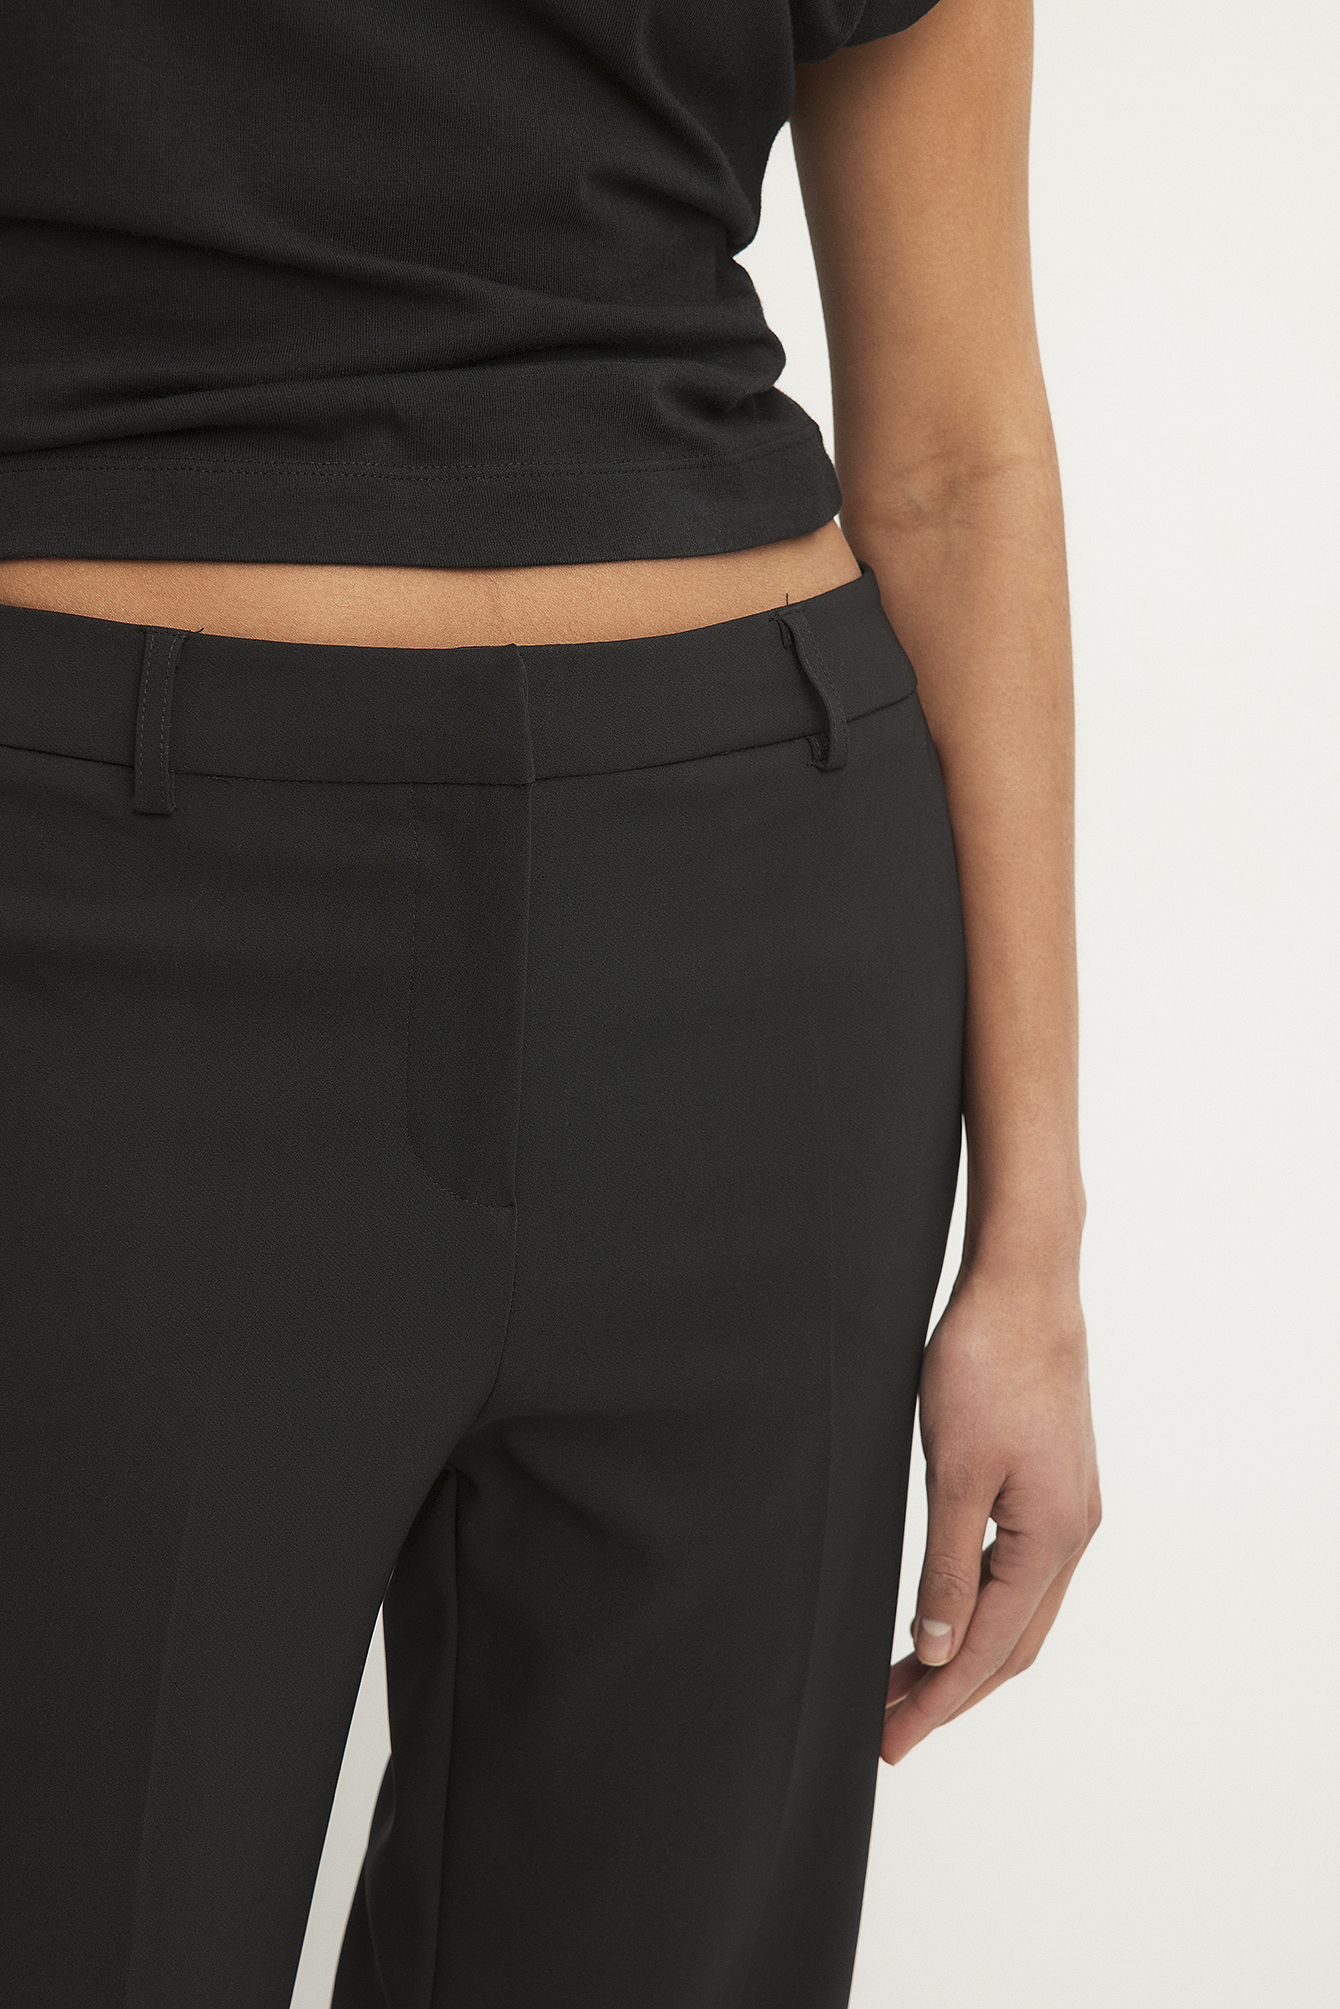 Women's boot cut Jeans low rise Black Bootcut pants Stretch workwear  Trousers | eBay